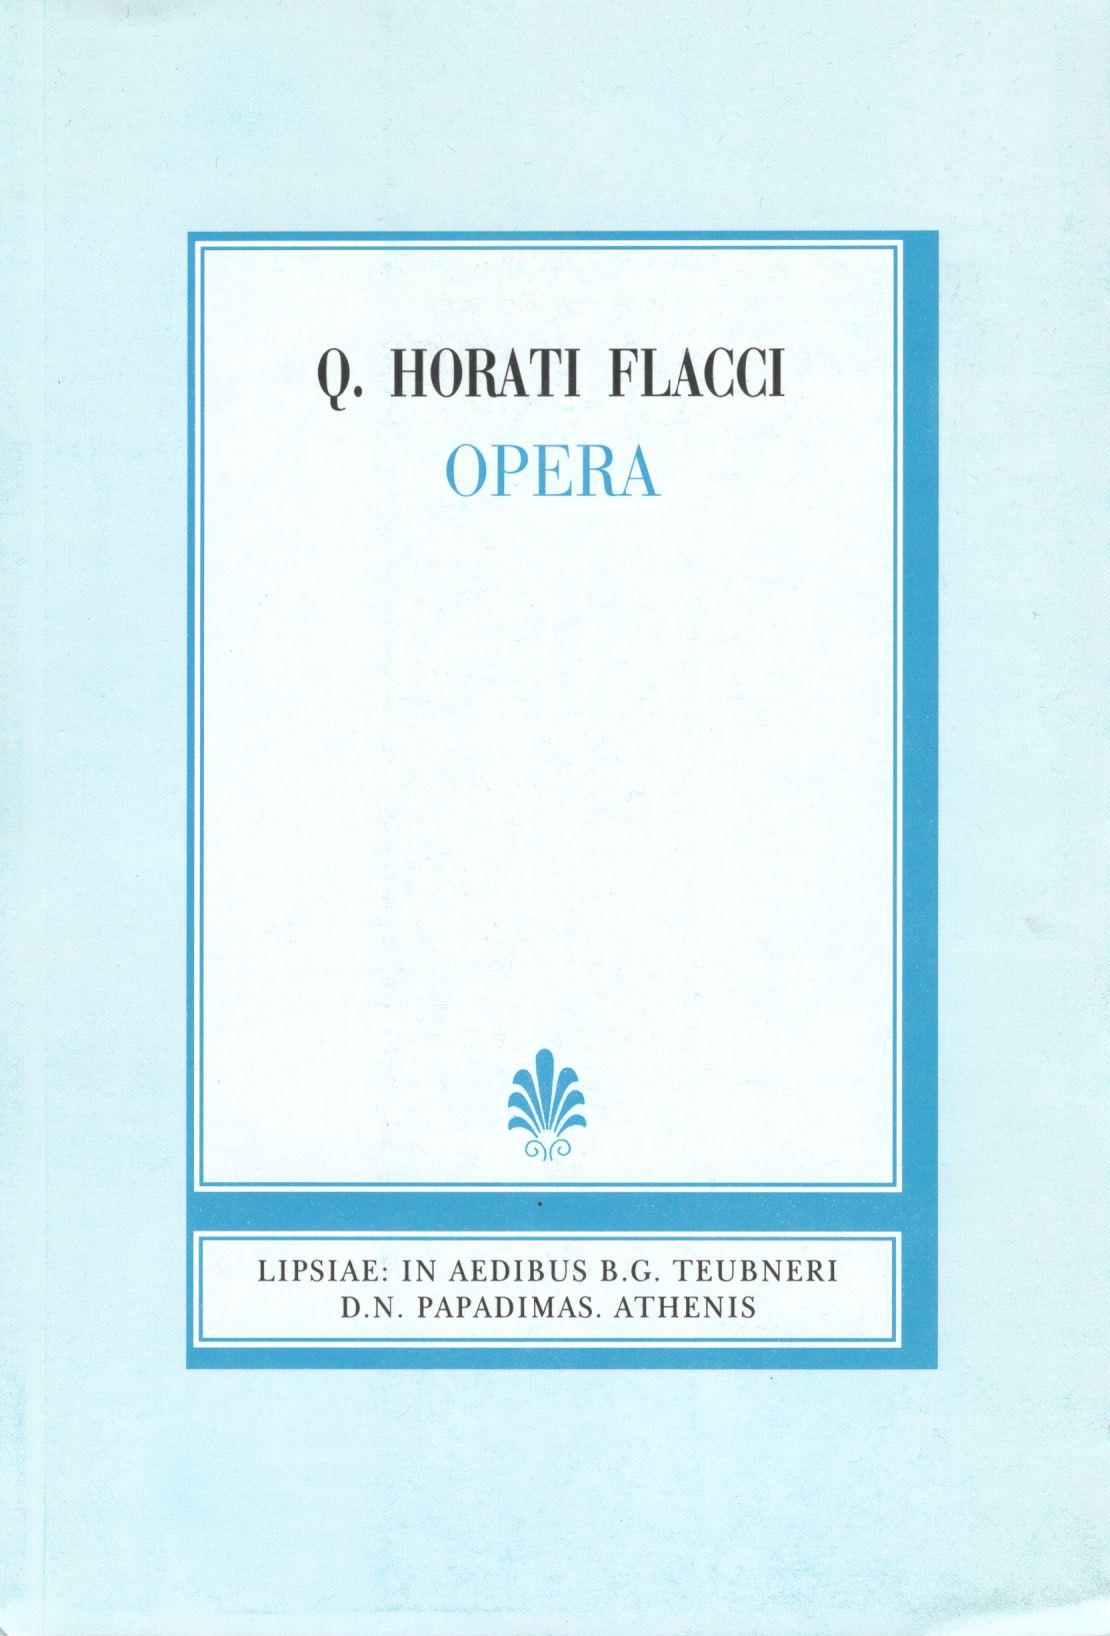 Q. Horati Flacci, Opera. Carmina: Libri I-IV, [Κοίντου Οράτιου Φλάκκου, Ωδαί: βιβλία Α'-Δ']